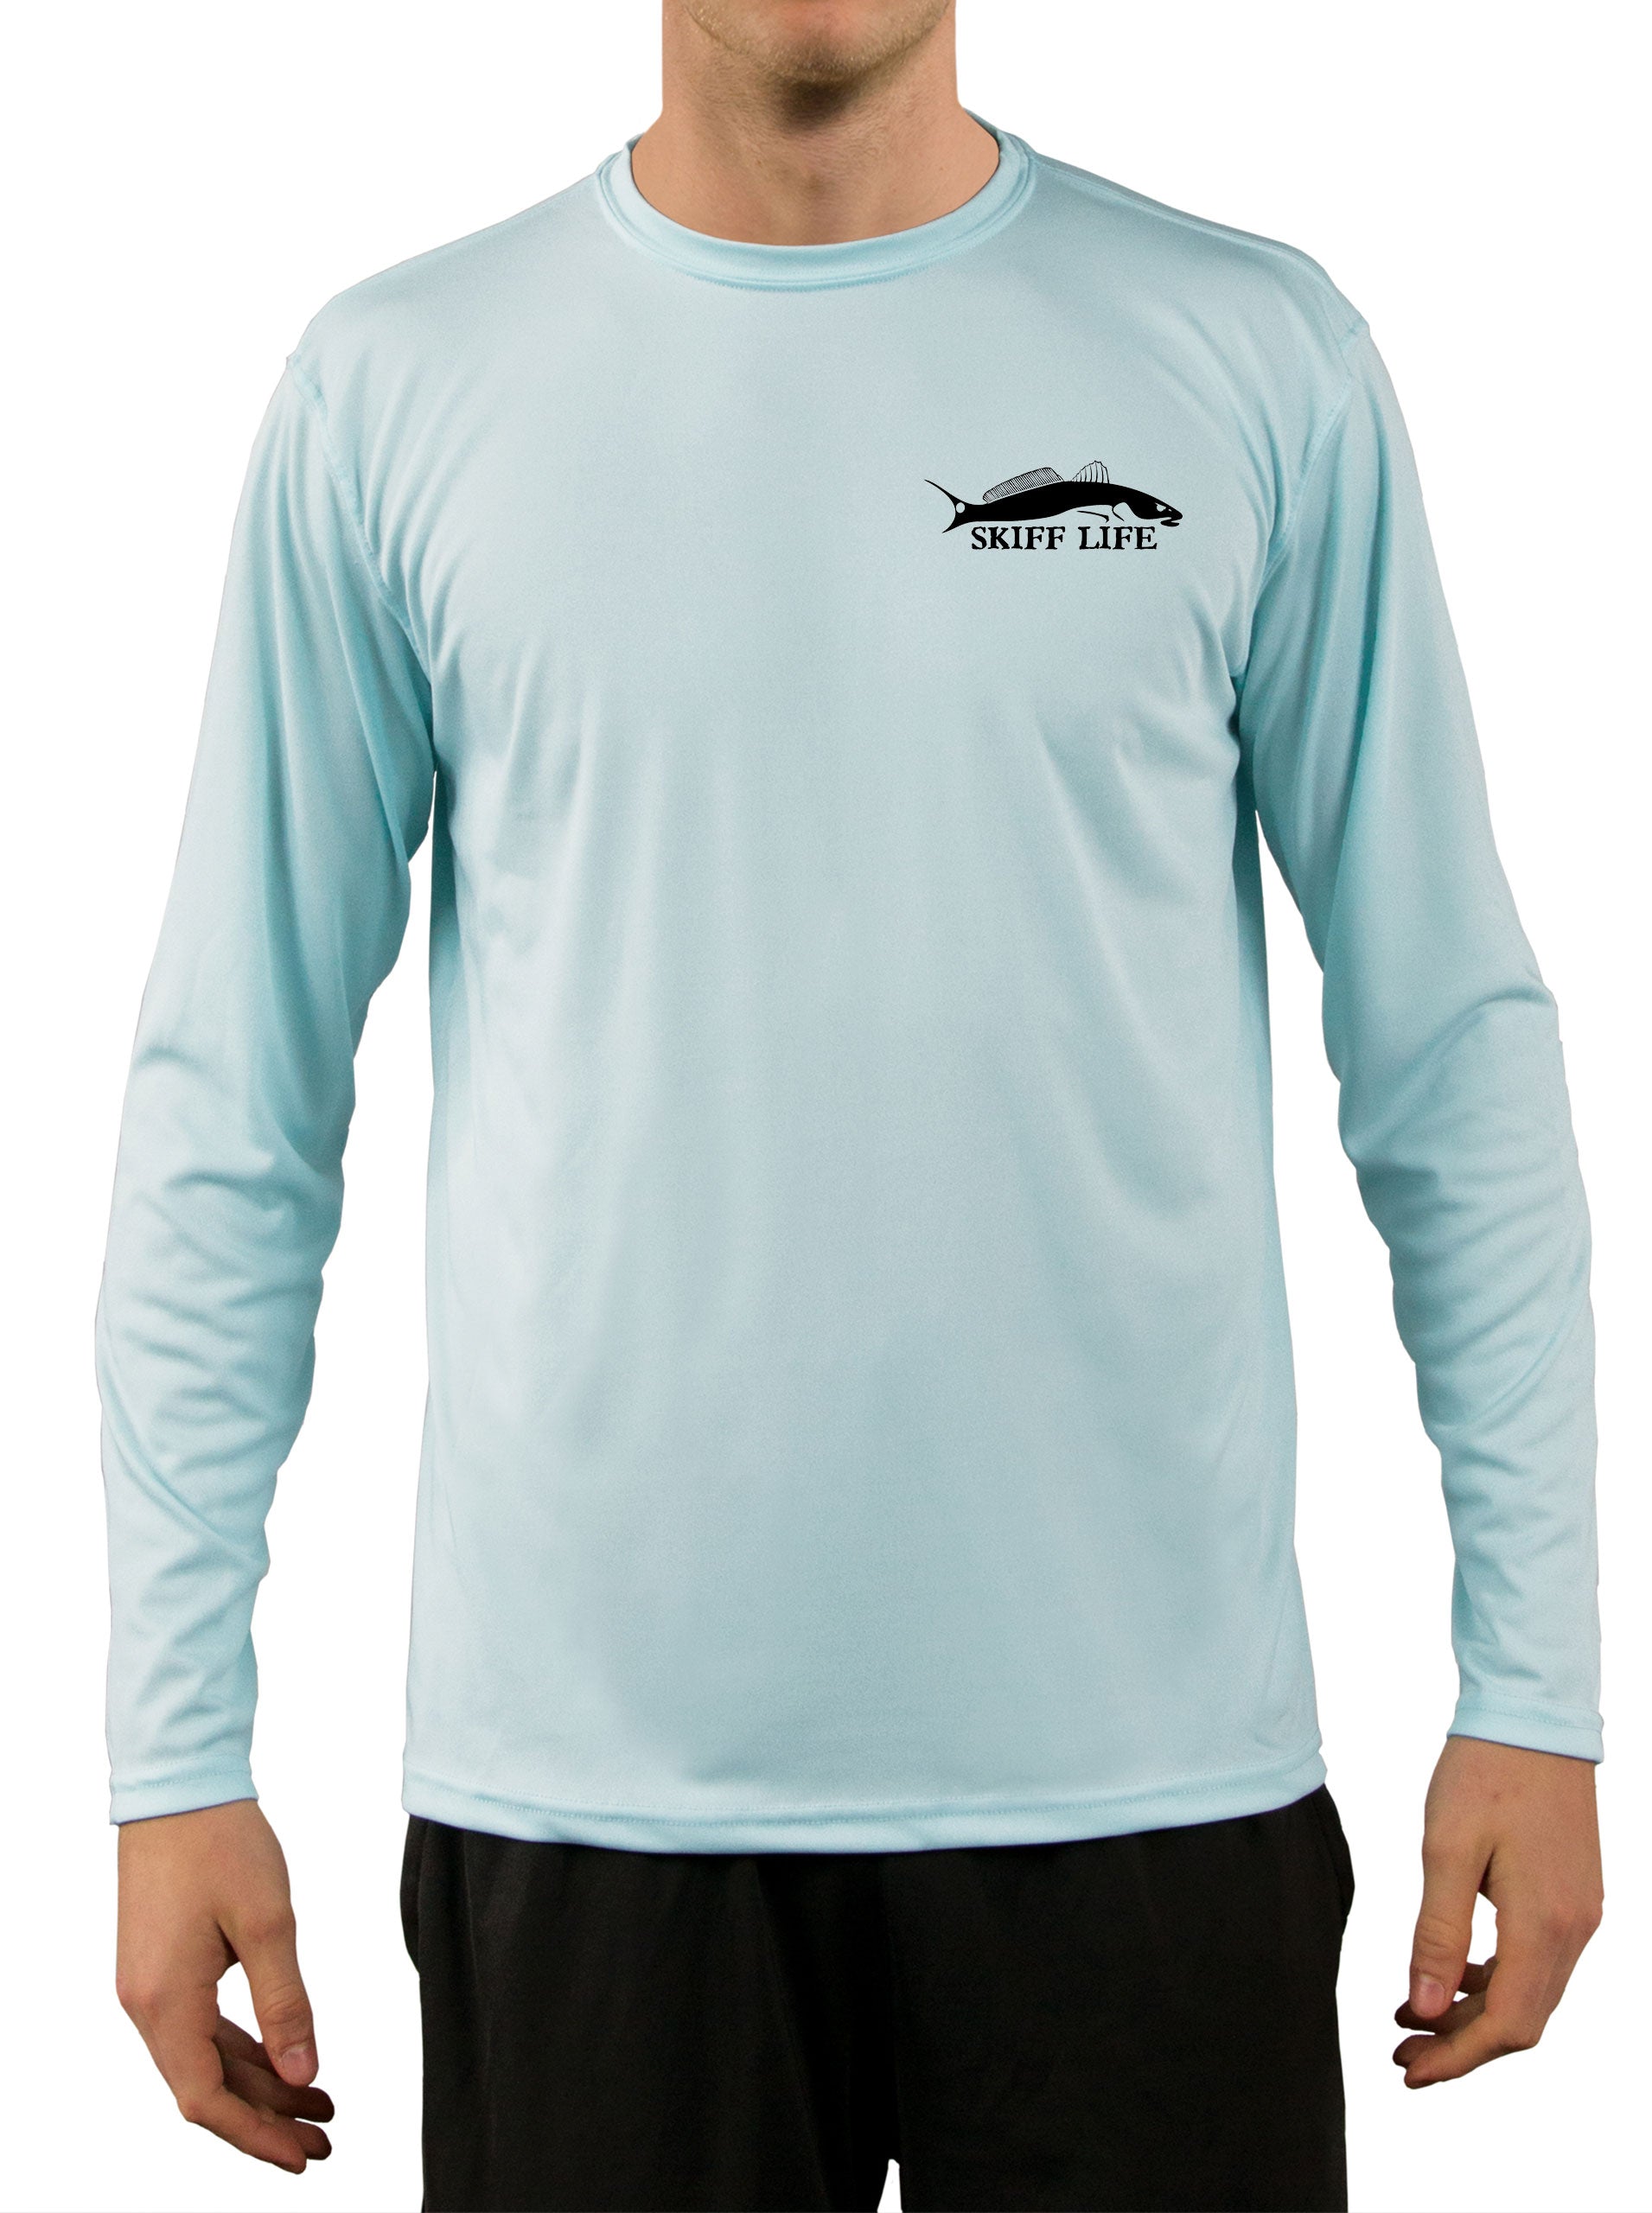 Rig Performance Fishing Long Sleeve T-Shirt Men's Size XL NWT UPF